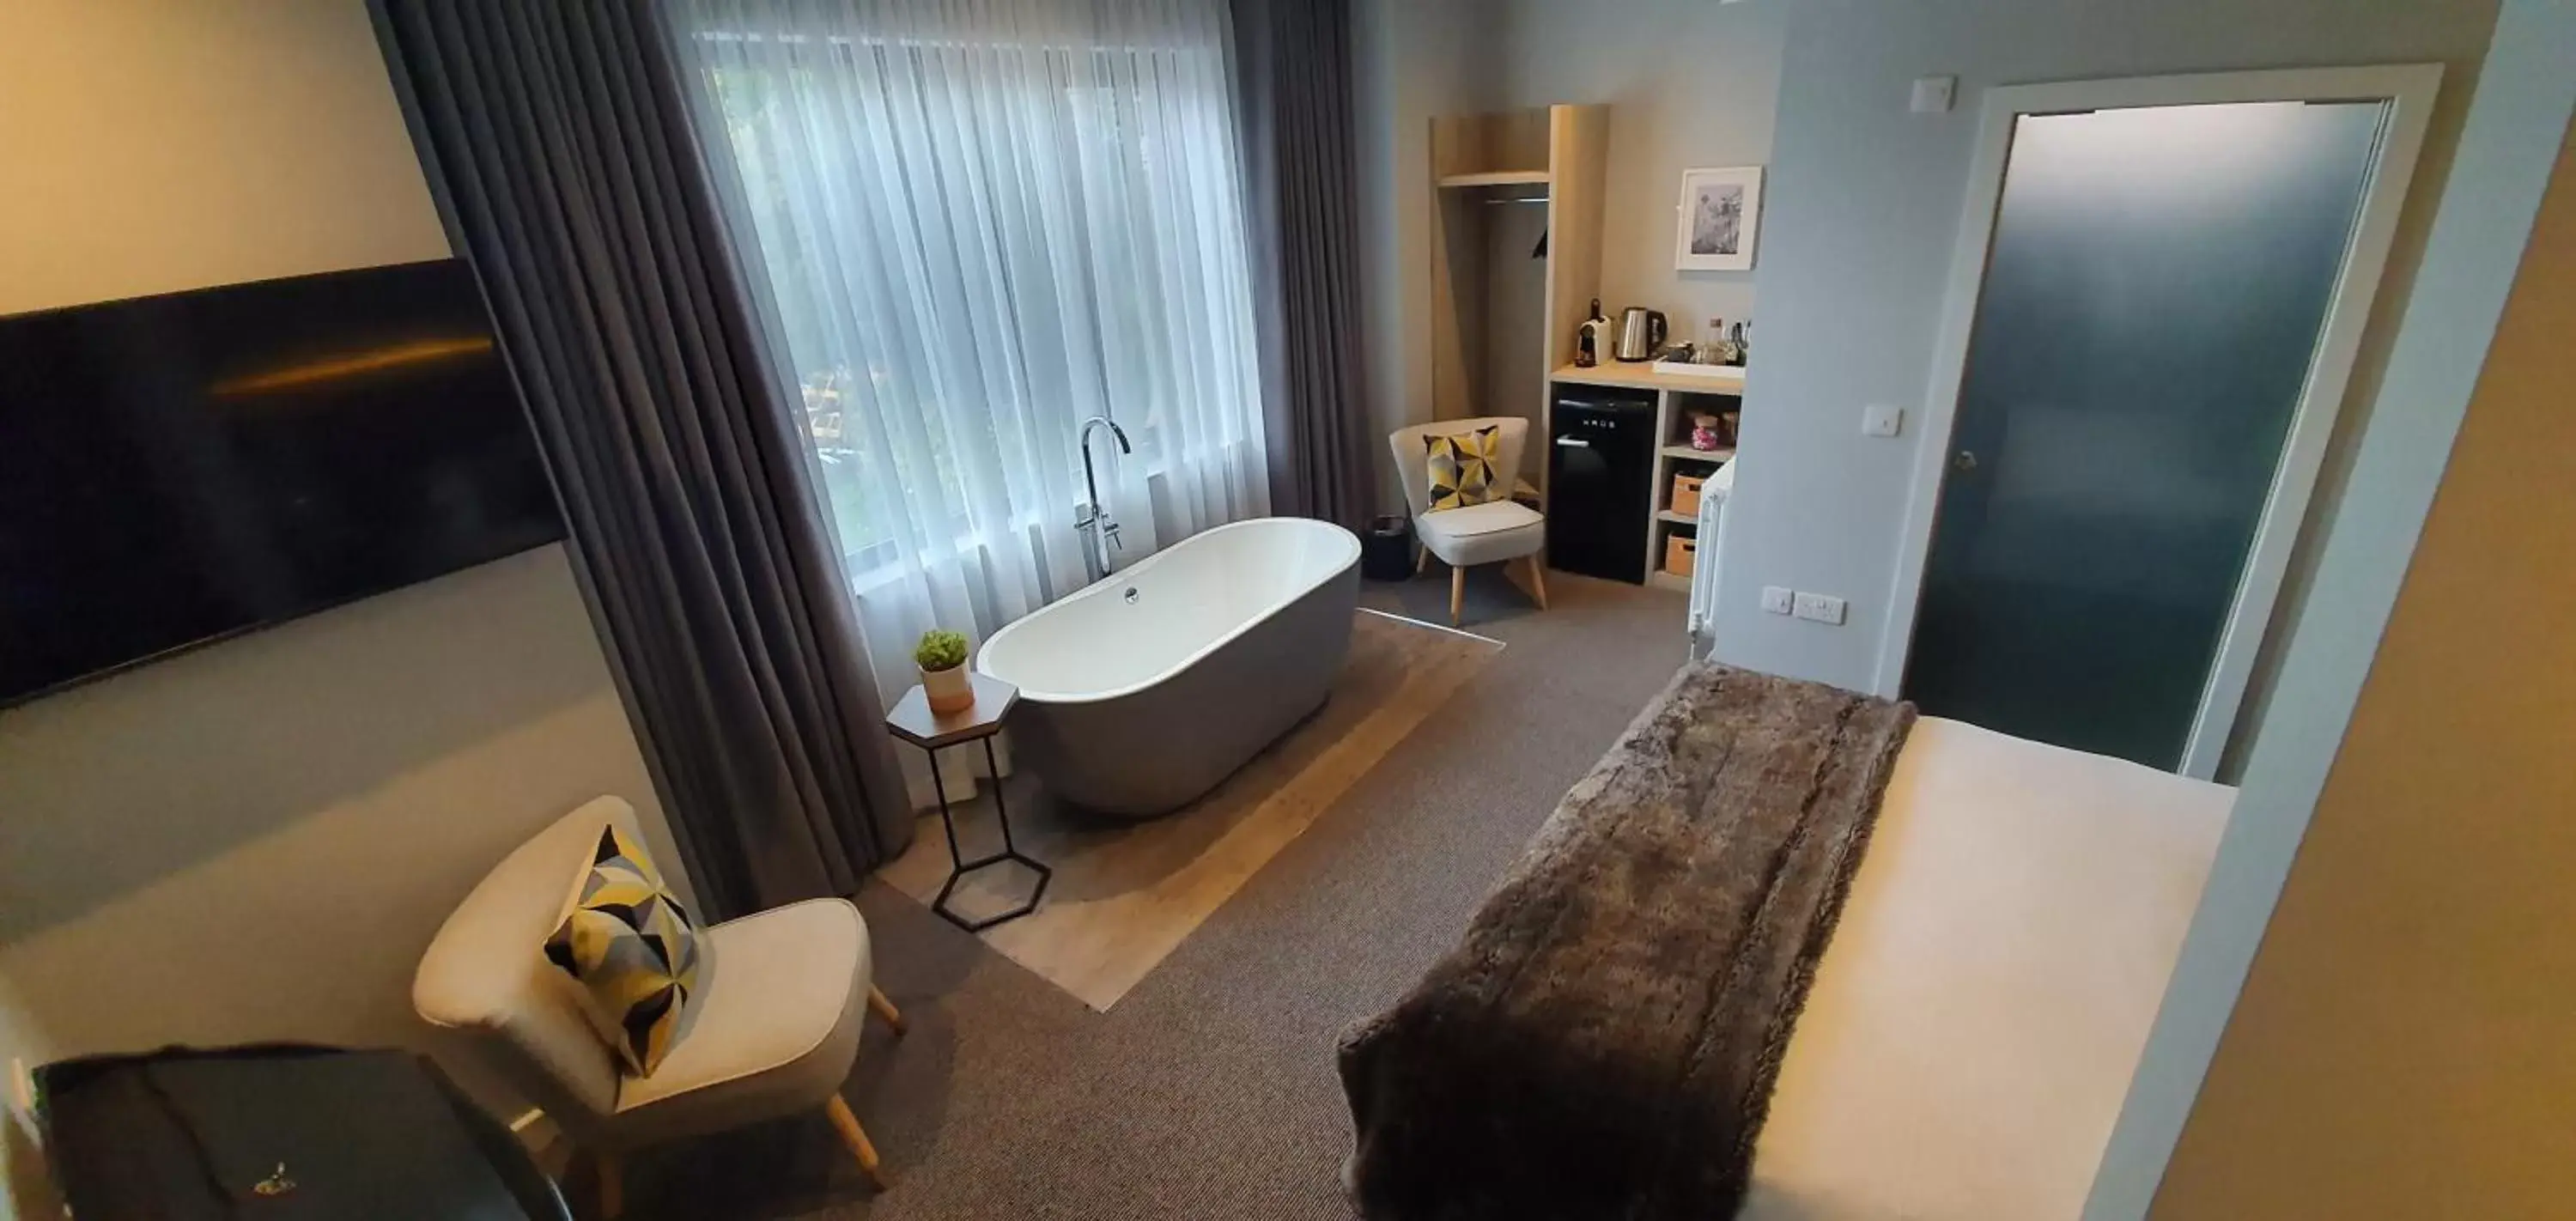 TV and multimedia, Bathroom in Jorvik House